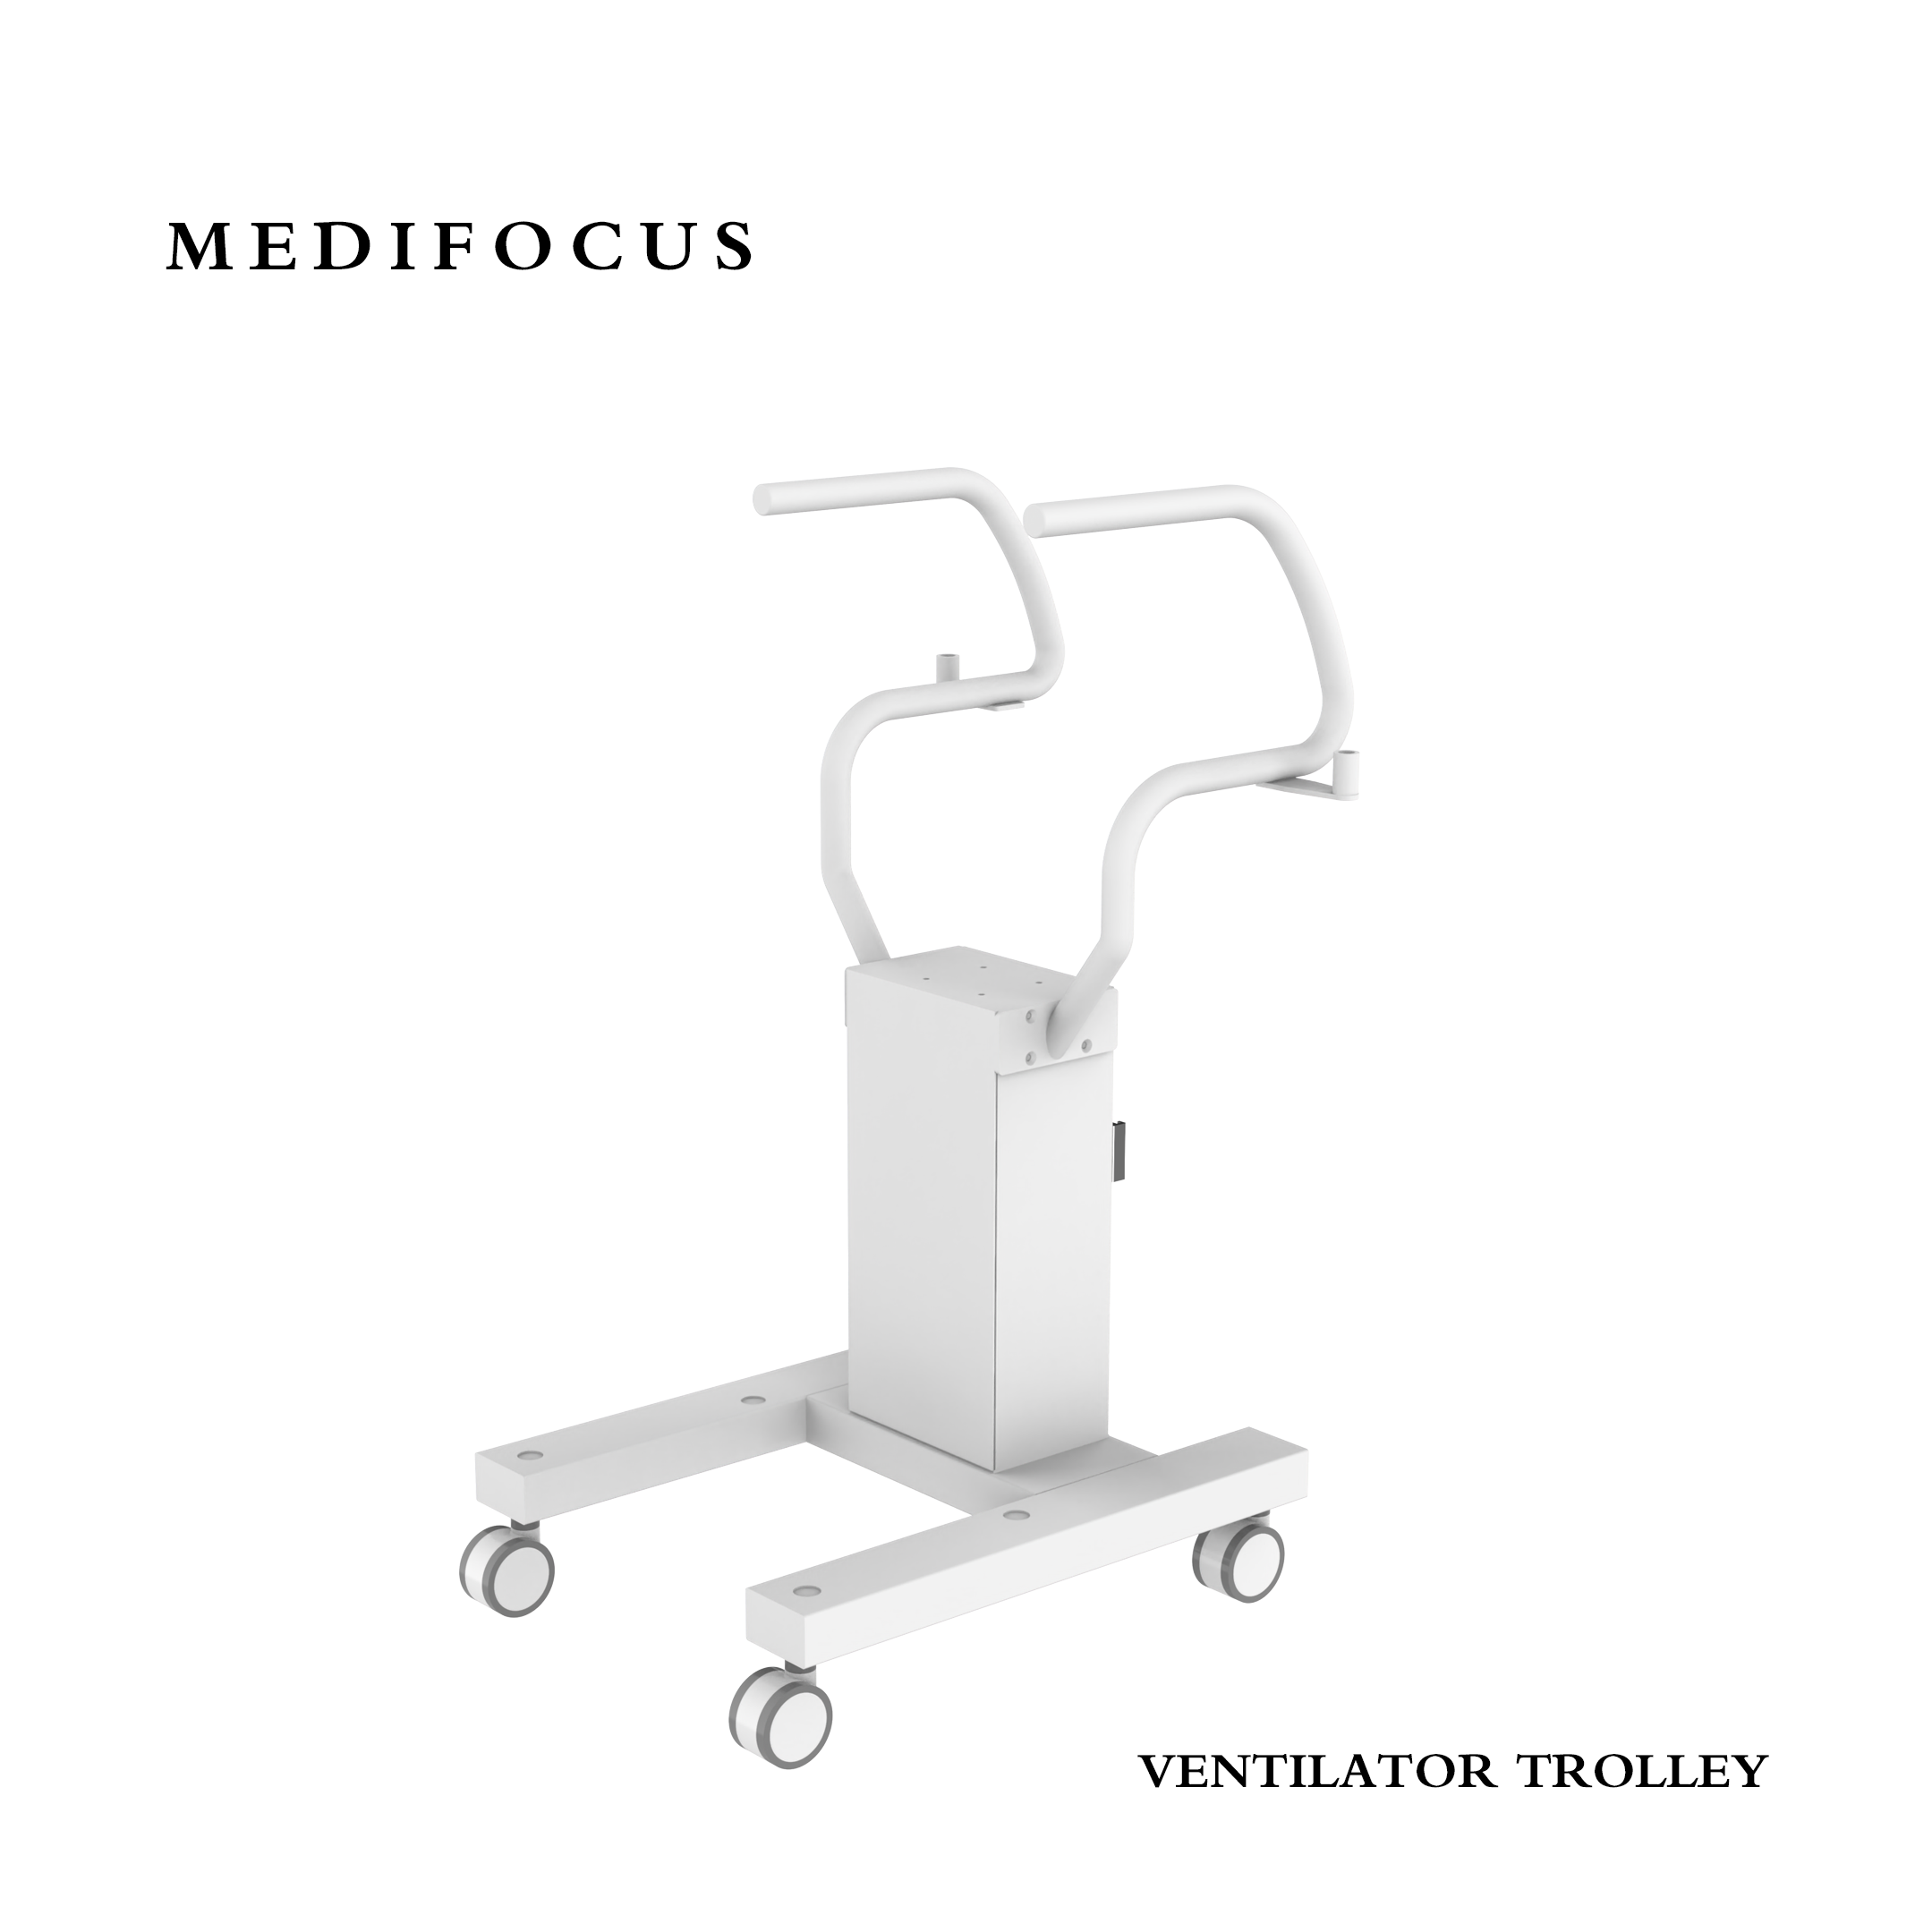 Ventilator trolley F02 for eVent 5i medical cart trolley new design OEM acceptable